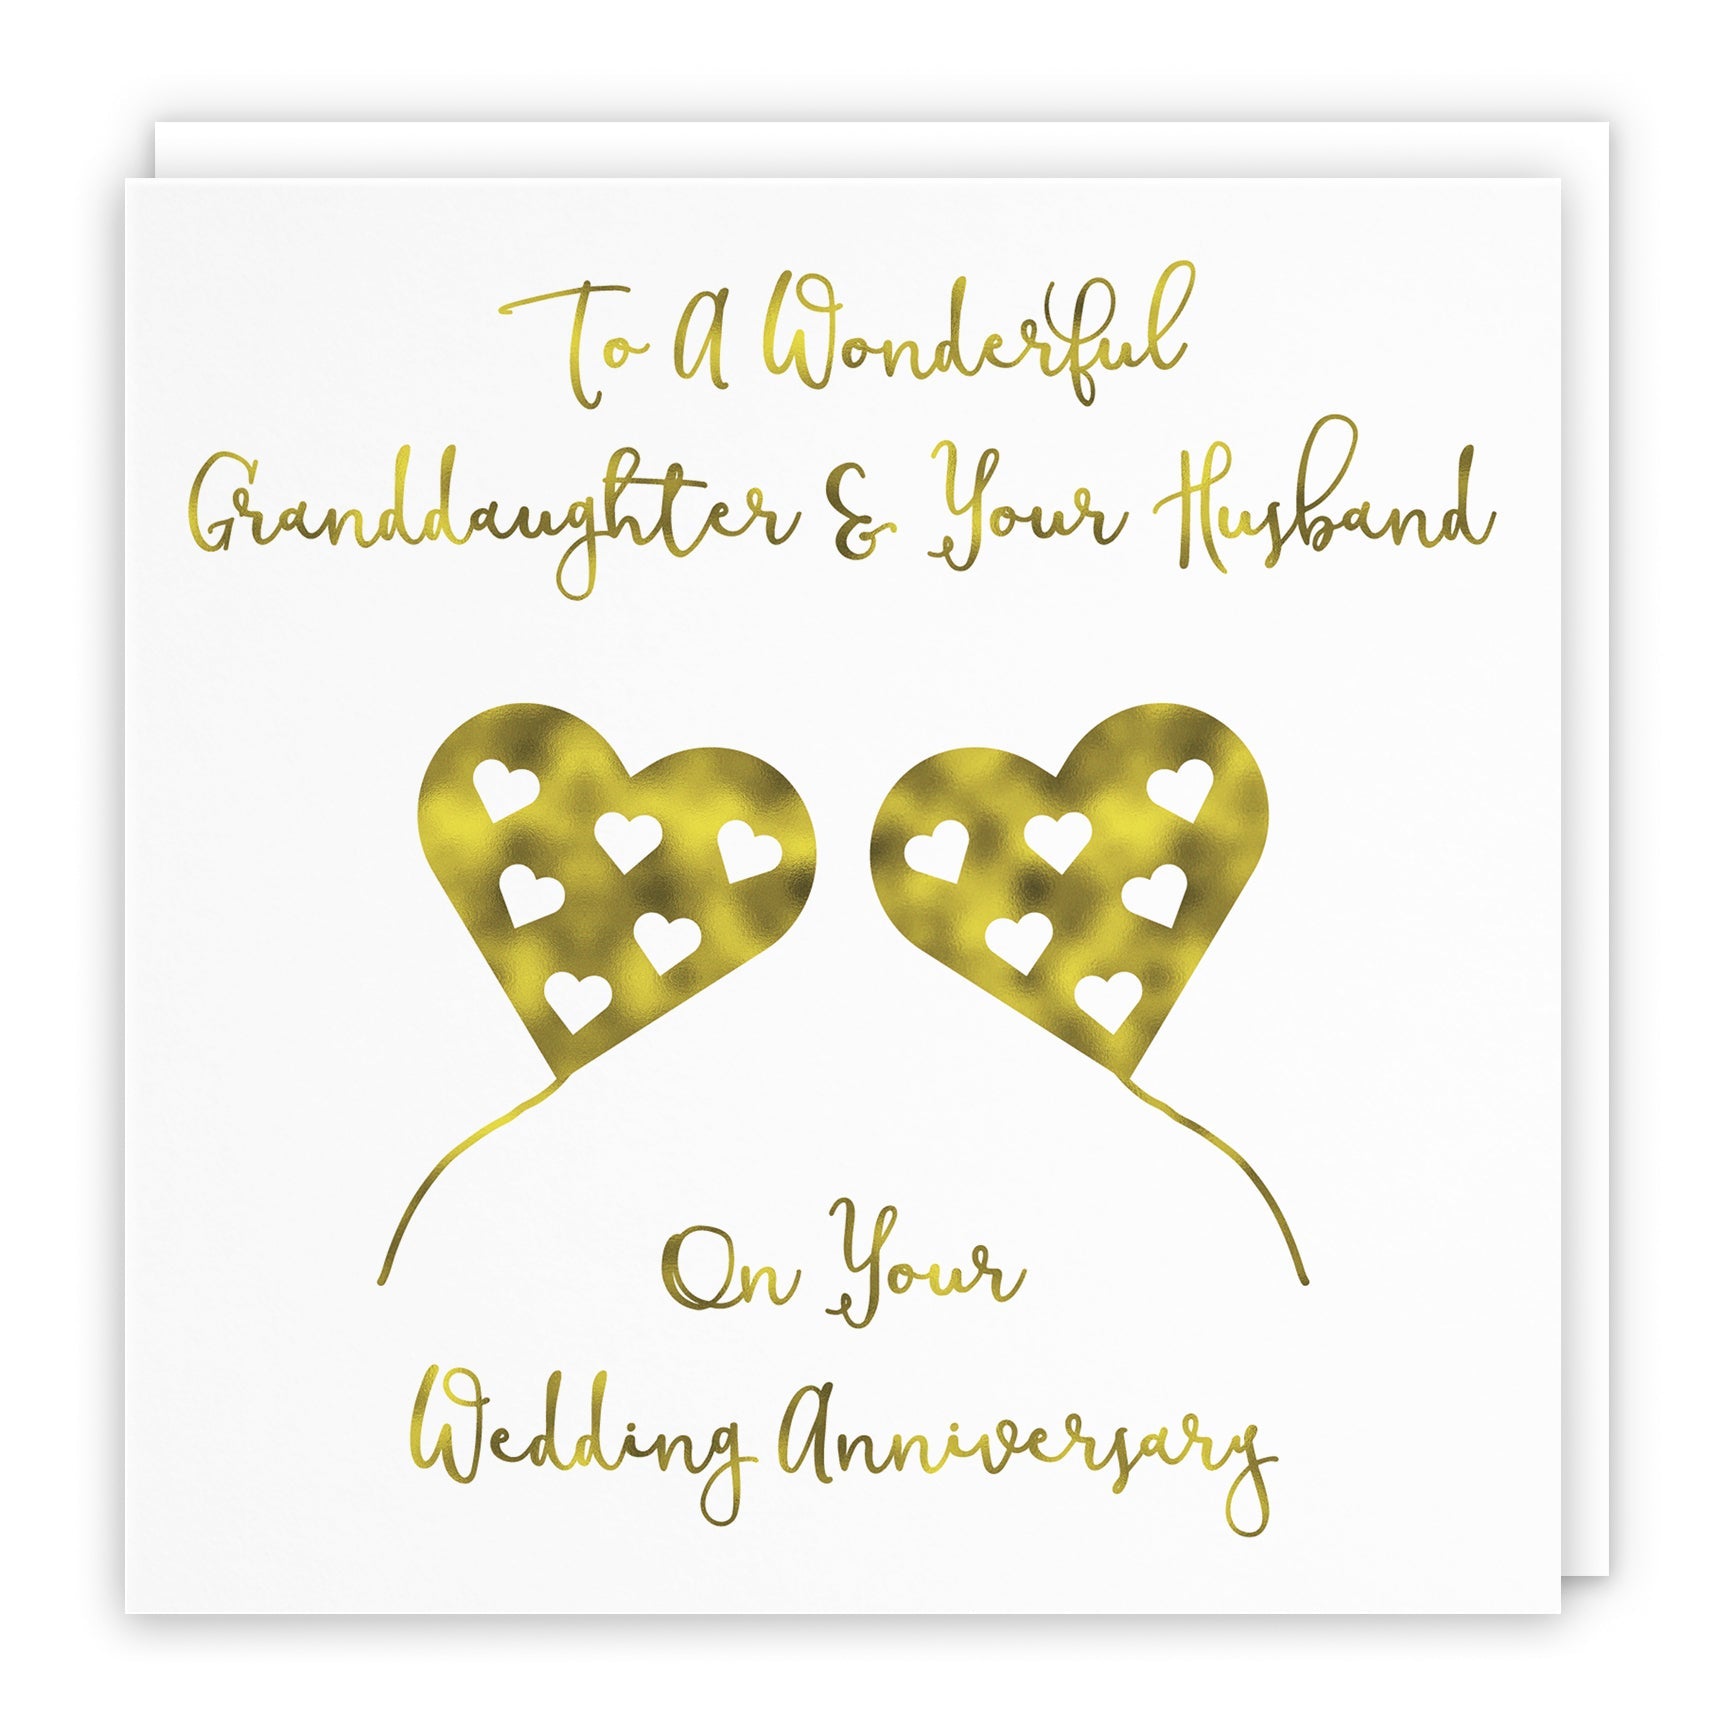 Granddaughter & Husband Anniversary Cards